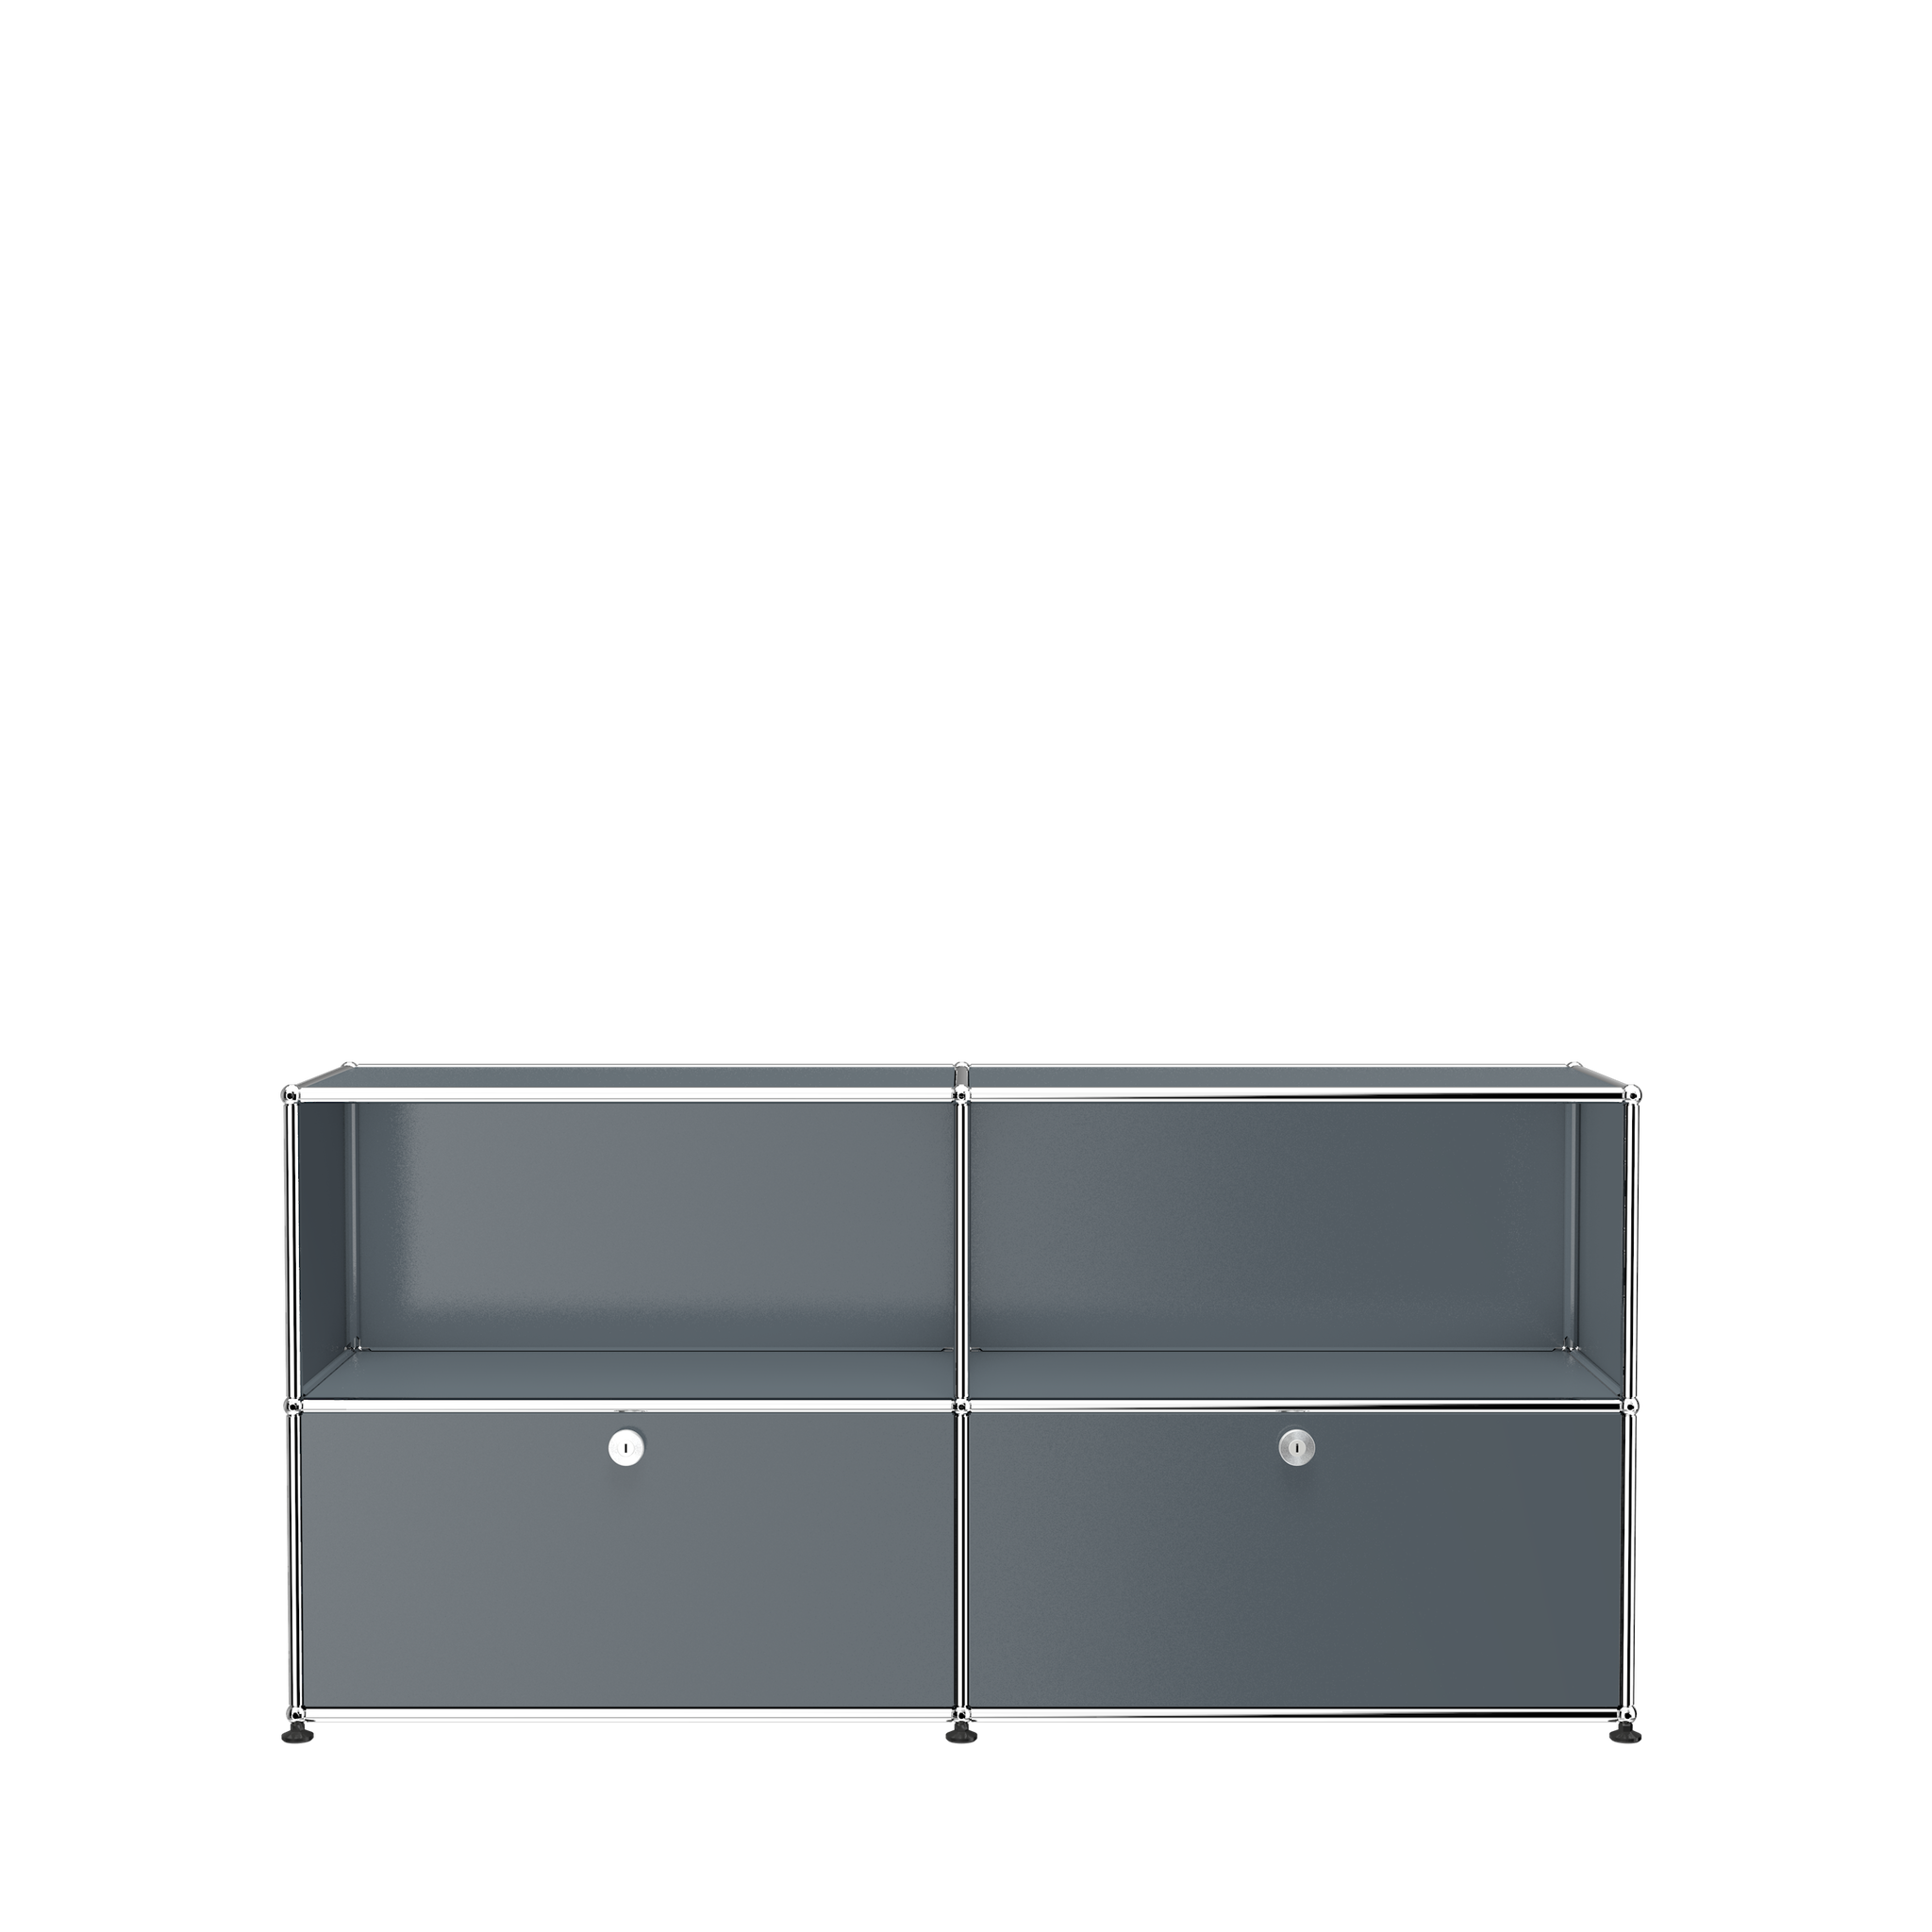 USM Haller Steel 2 Door Credenza File Cabinet (C2A) in Mid Gray